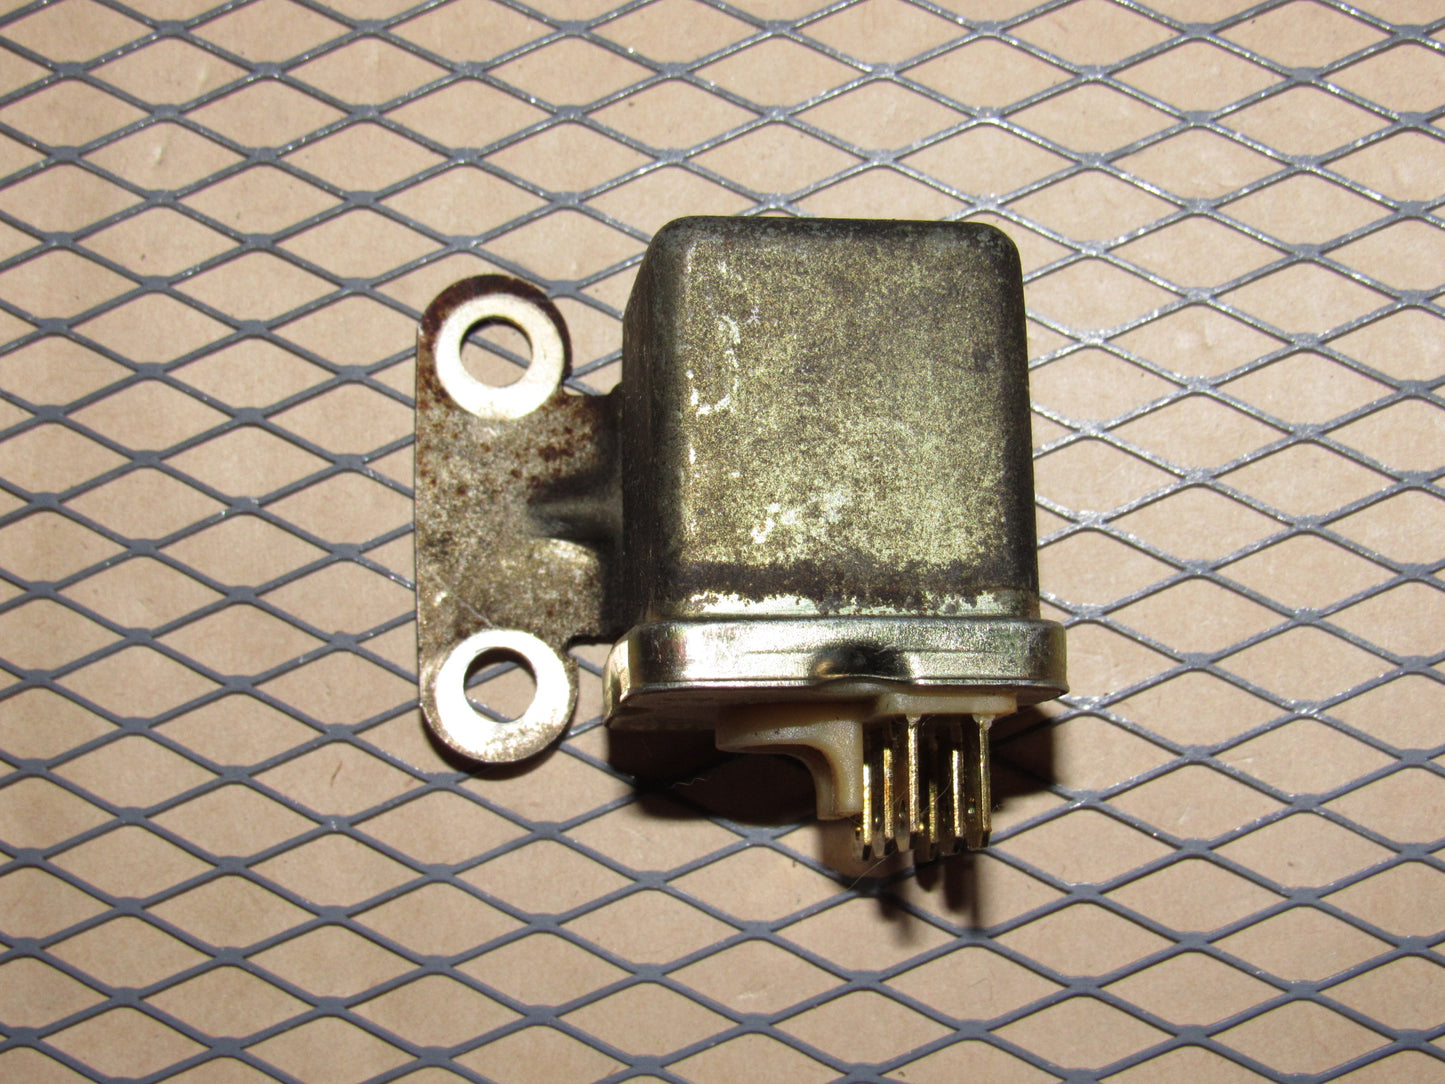 Datsun Relay 6 pin Left Side Mounting Bracket